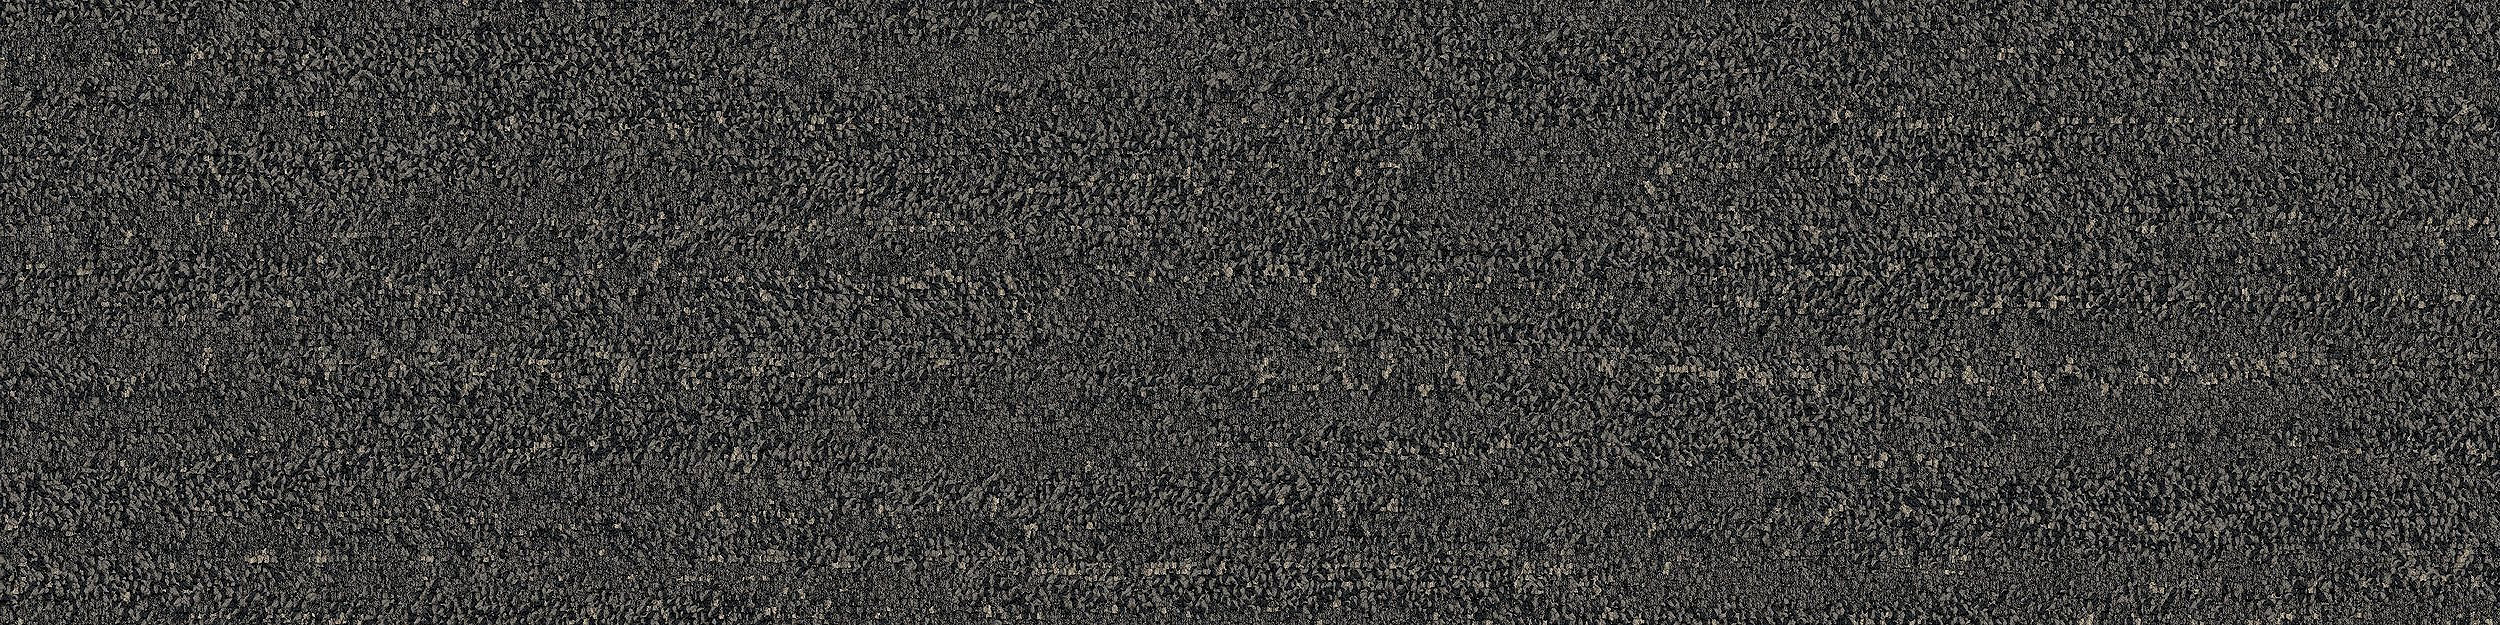 Rockland Road Carpet Tile In Charcoal Quarry imagen número 4